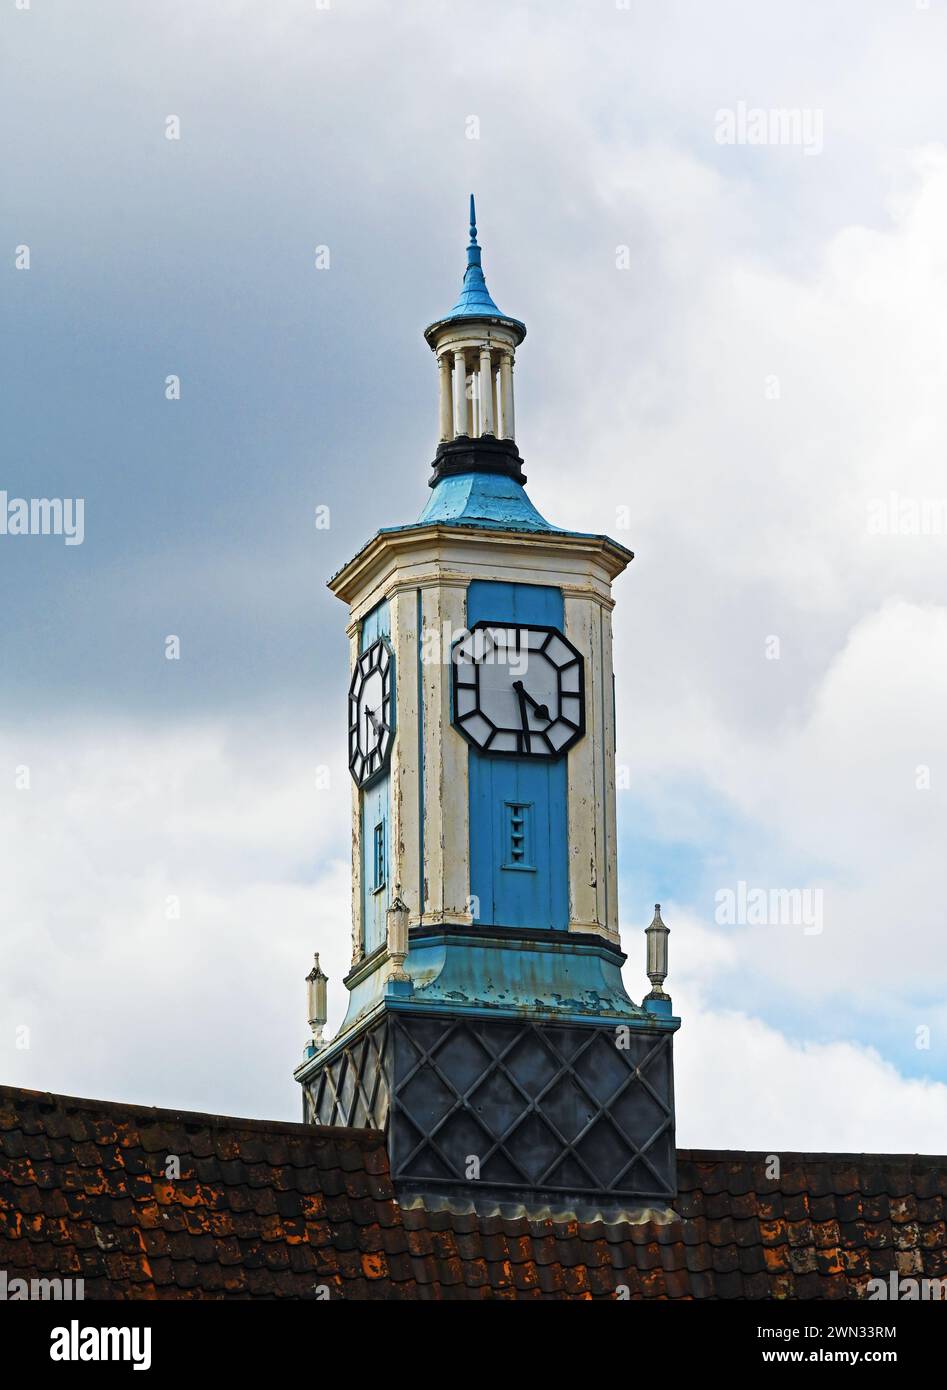 Tour de l'horloge. The Old Square Shopping Centre, Bridge Street, Walsall, West Midlands, Angleterre, Royaume-Uni, Europe. Banque D'Images